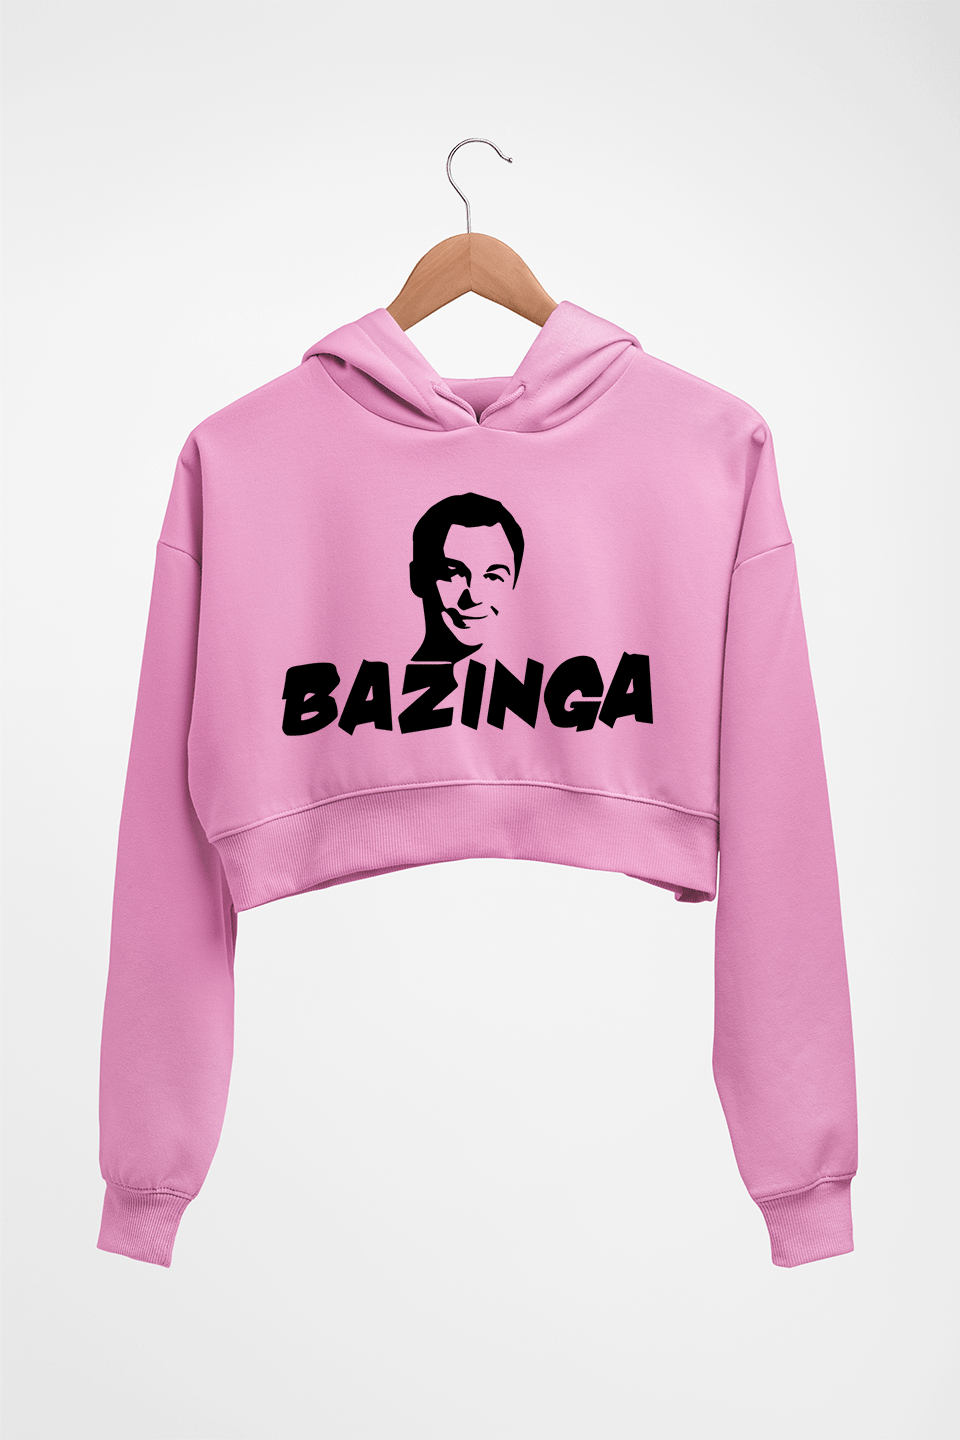 Sheldon Cooper Bazinga Crop HOODIE FOR WOMEN